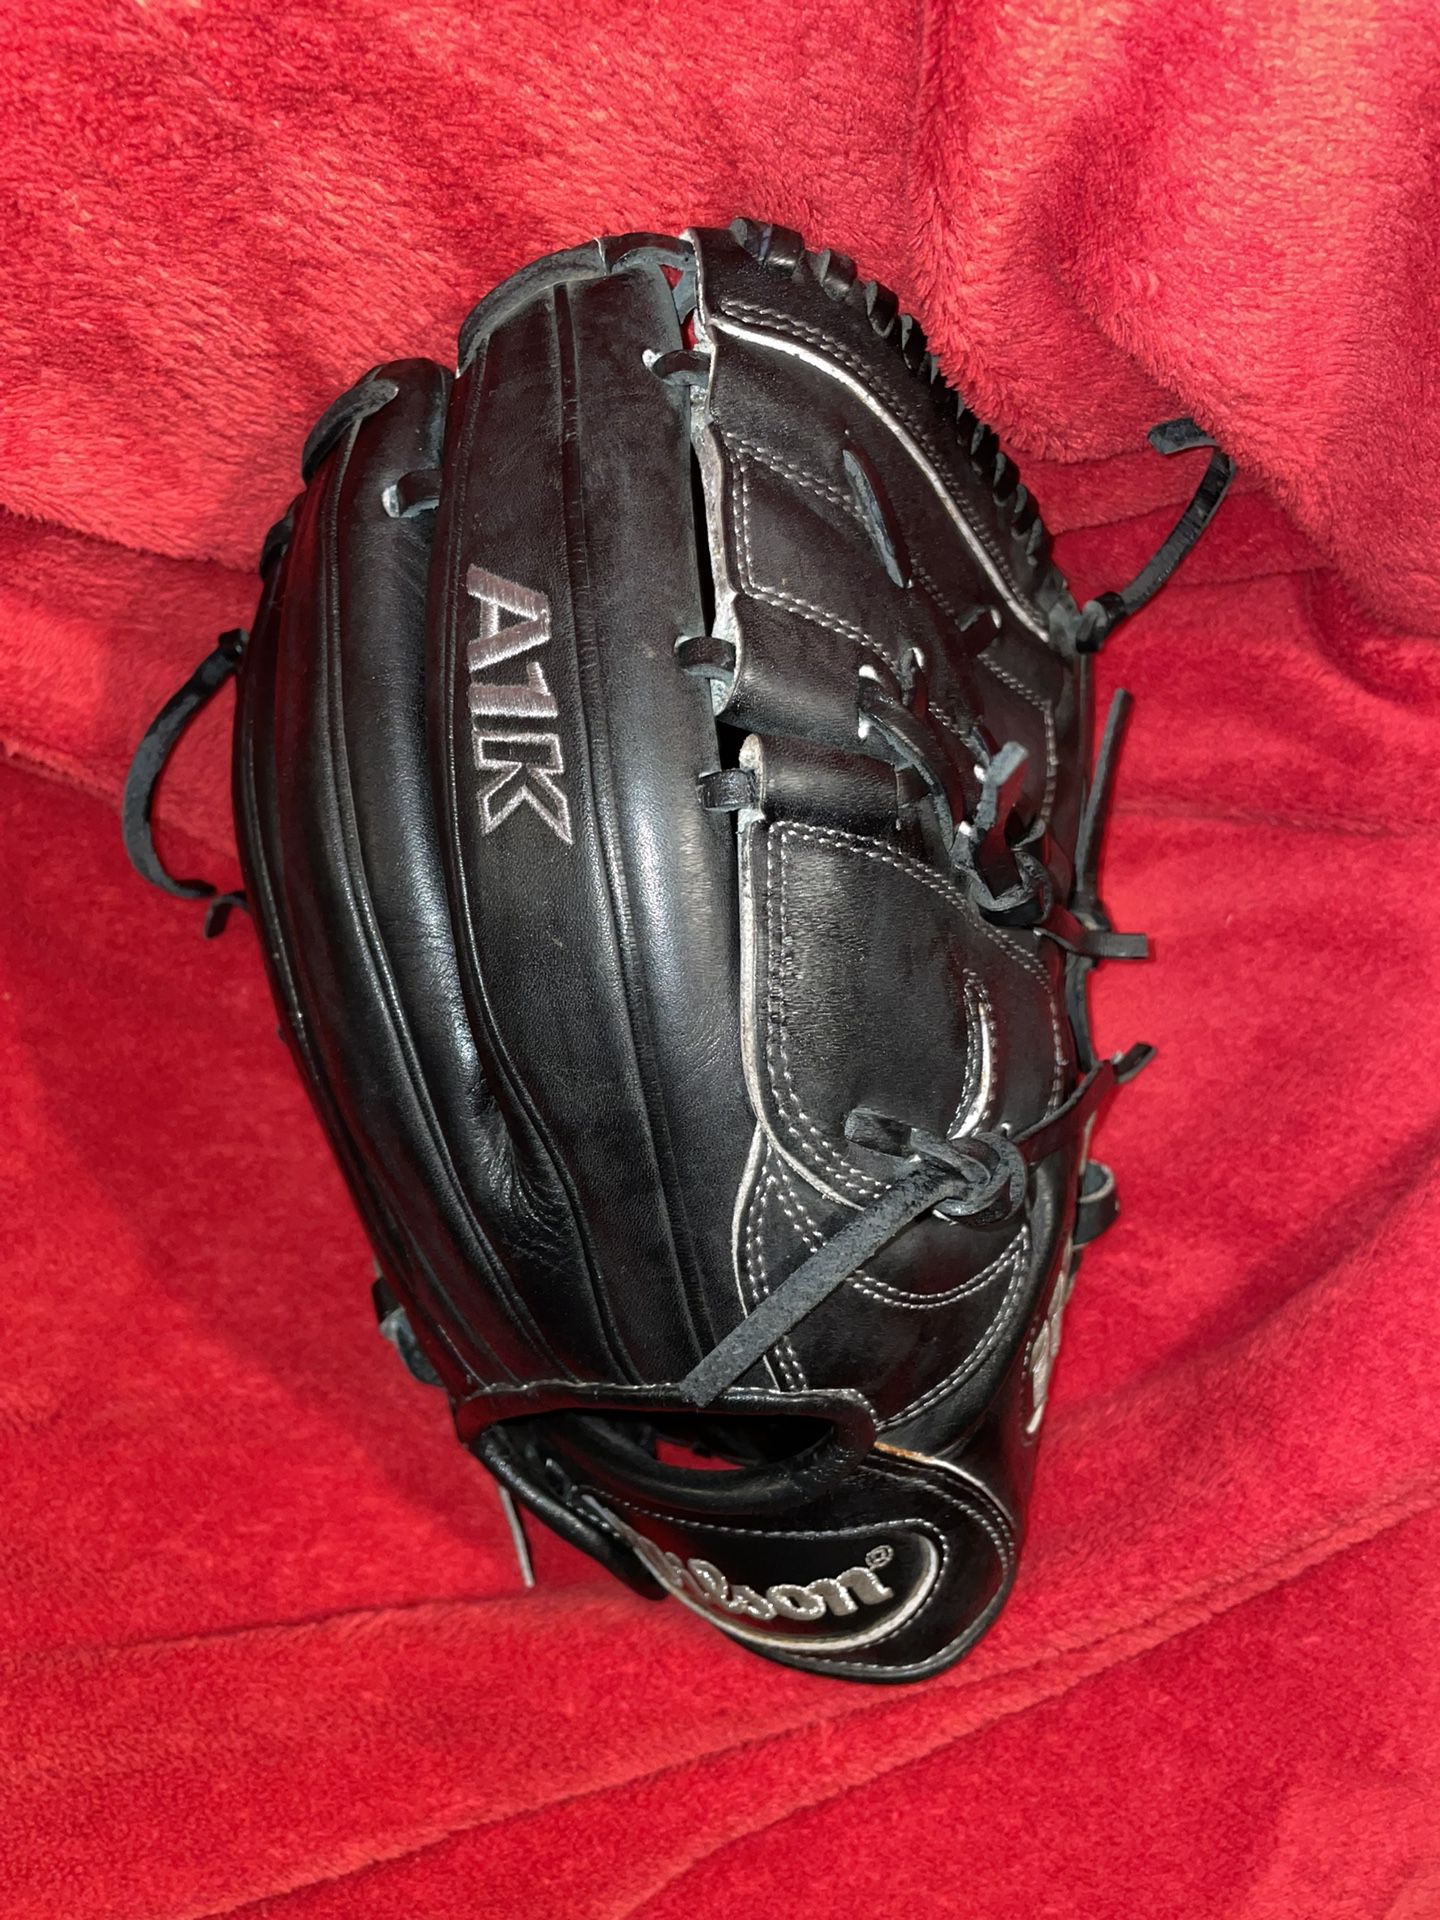 Wilson A1K11.75” Pitchers Glove